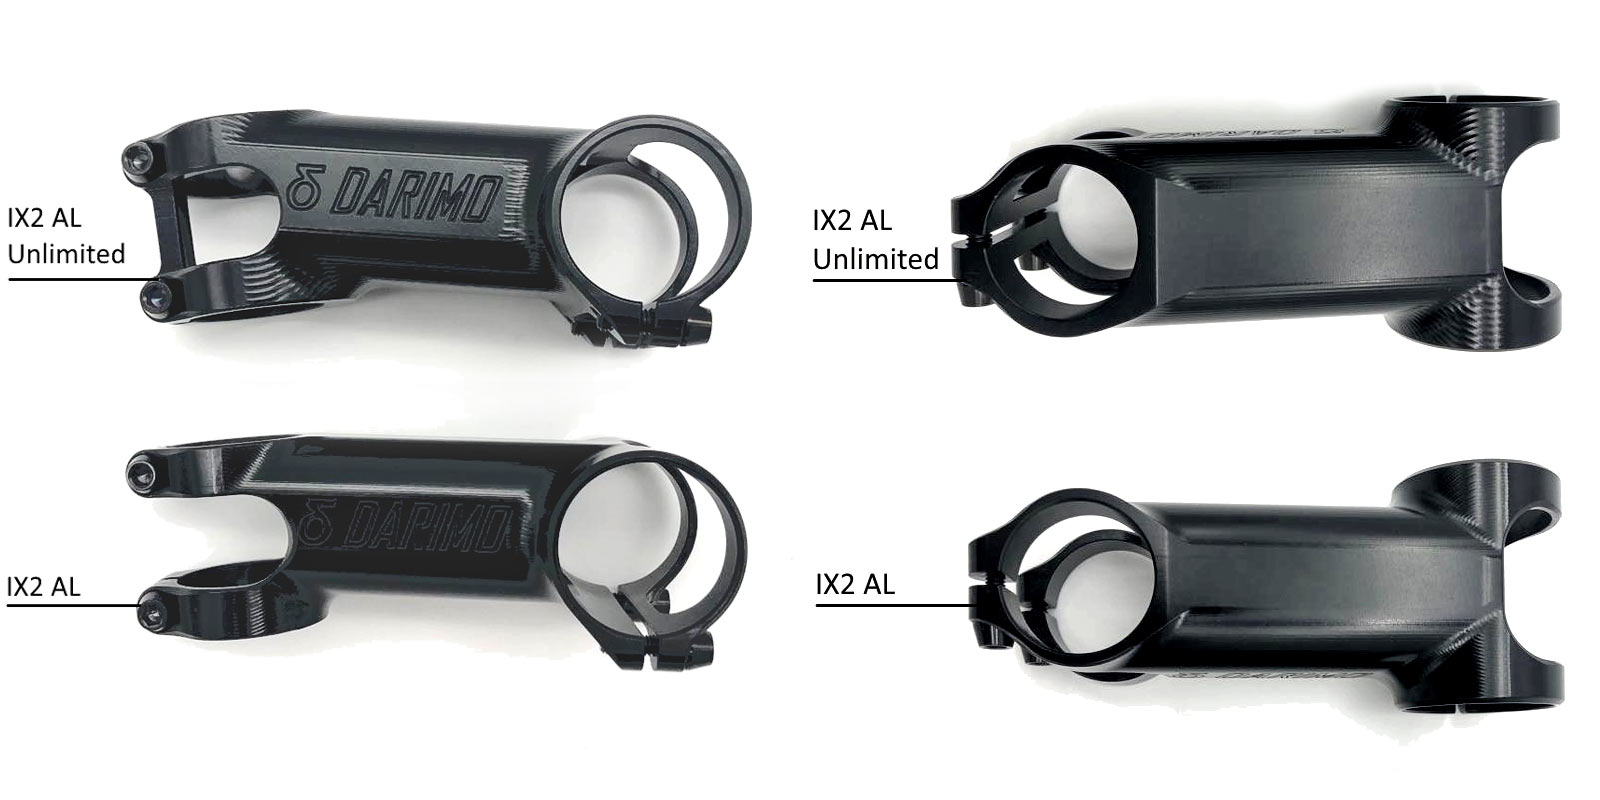 Darimo IX2AL Unlimited customizable ultralight aluminum alloy mountain bike stem, comparison